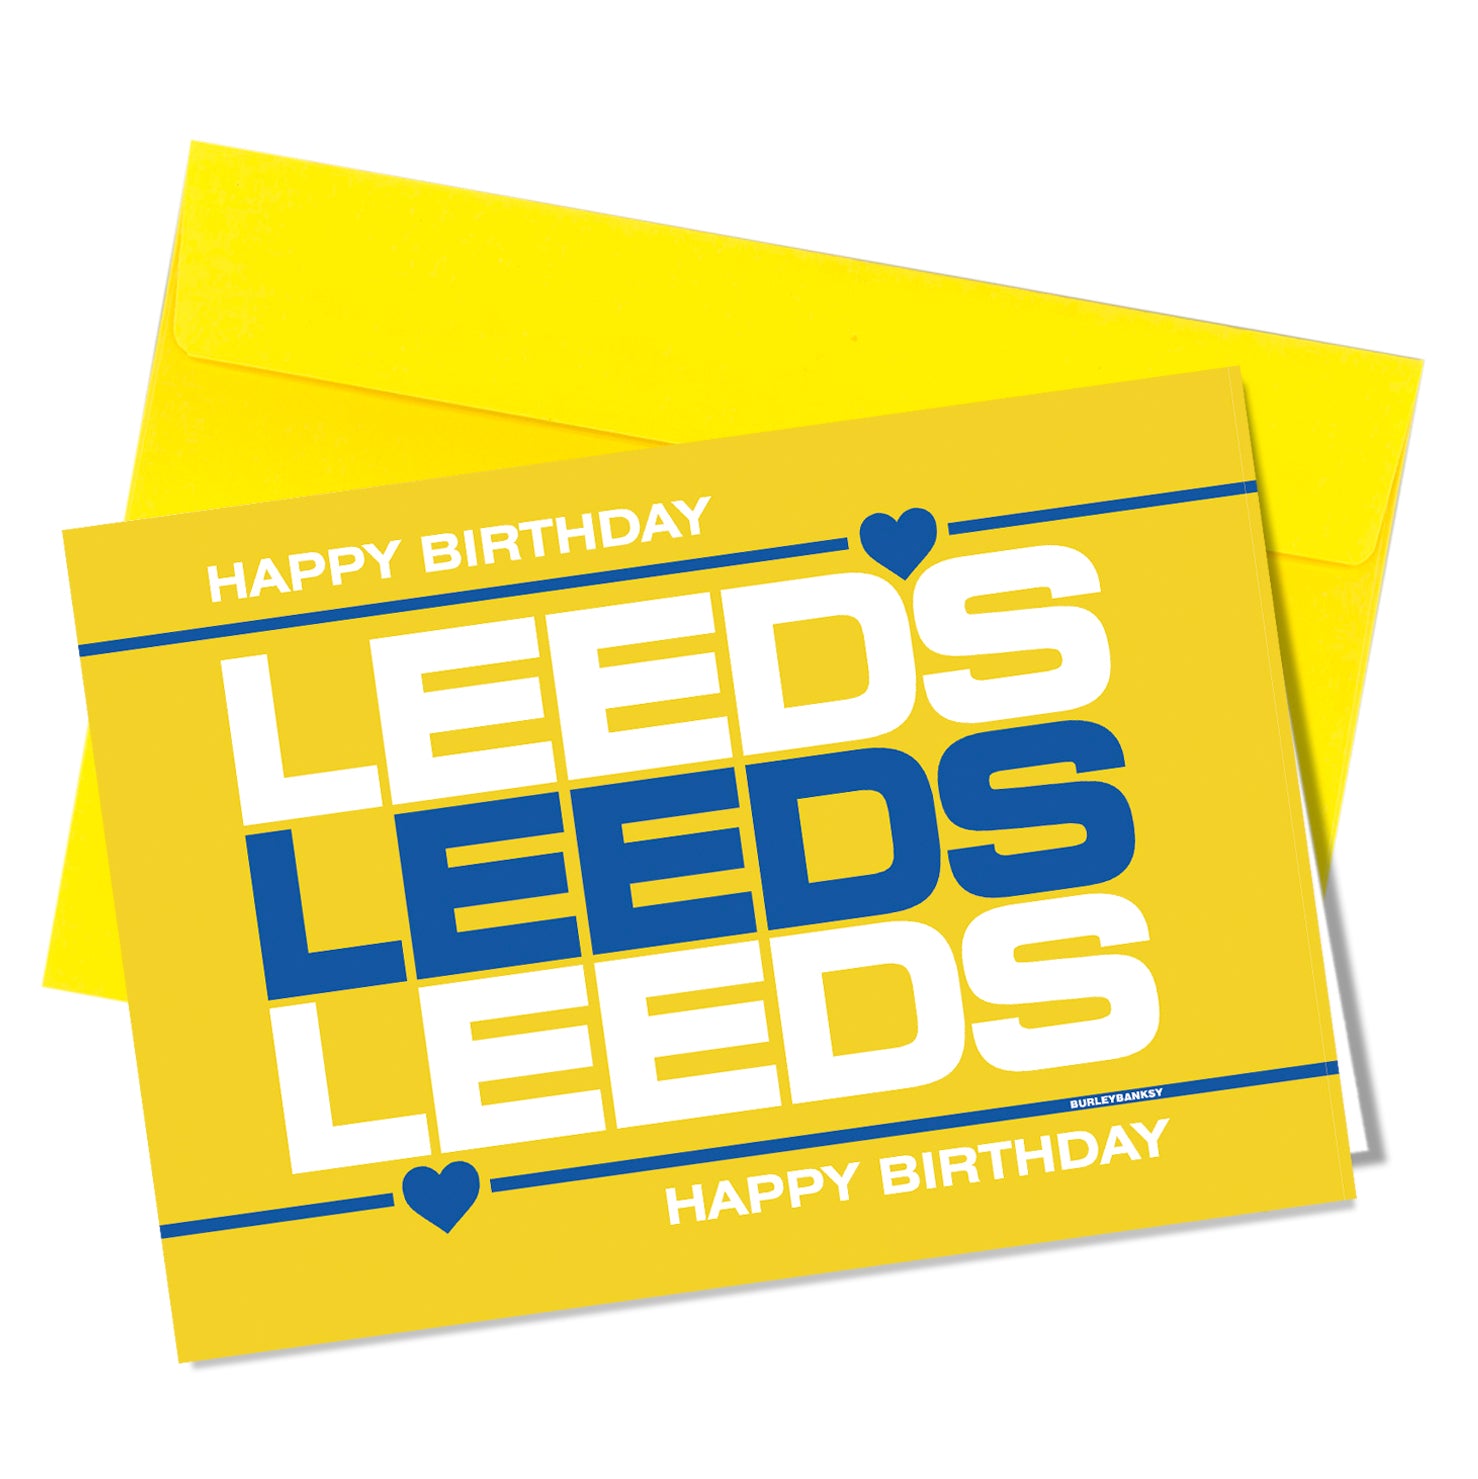 #BB010 Leeds Leeds Leeds Yellow